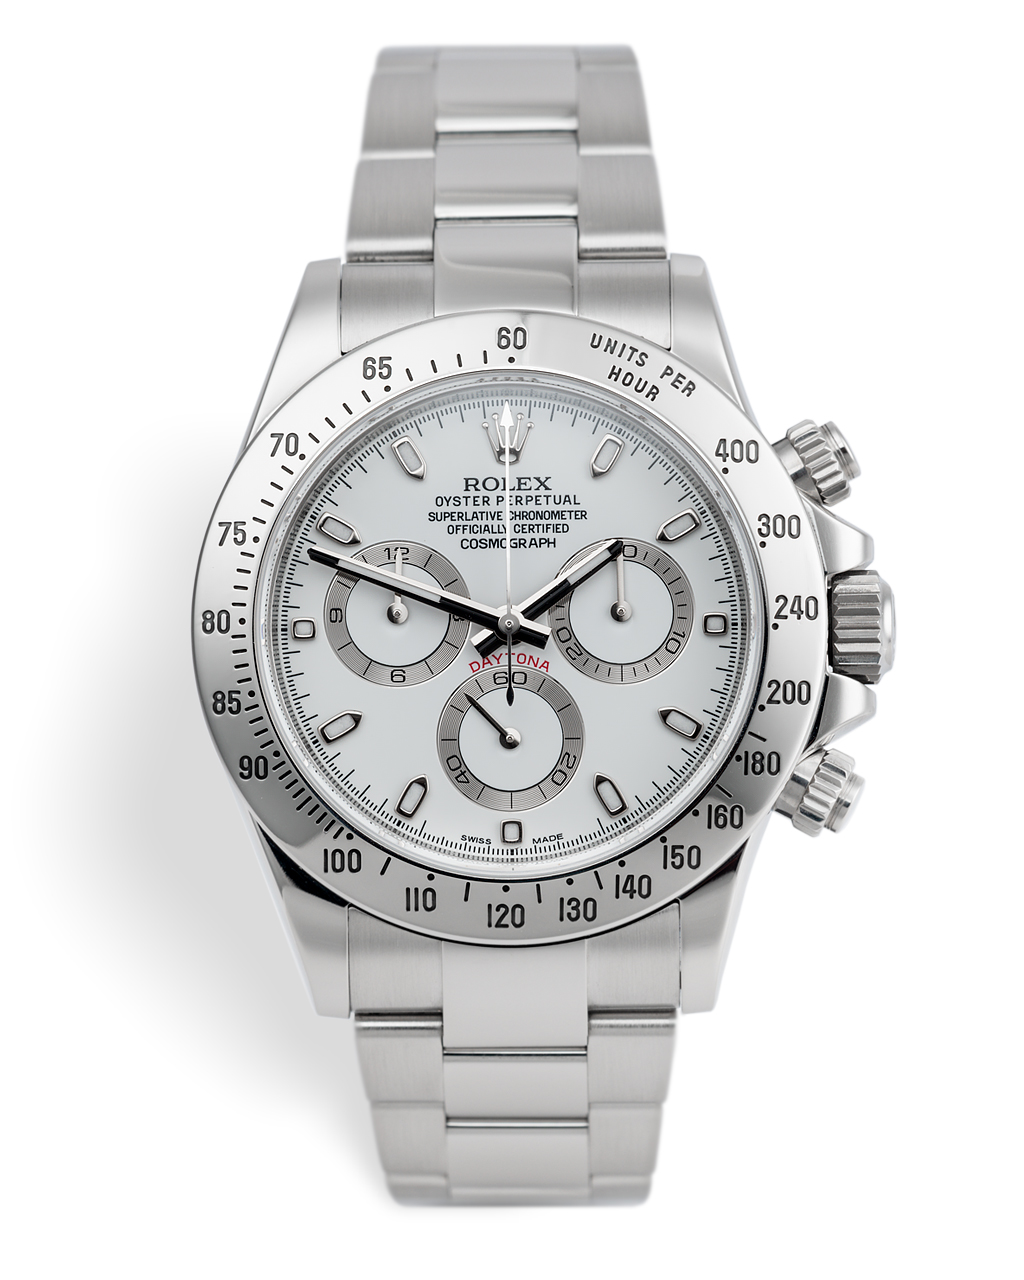 Rolex Cosmograph Daytona Watches | ref 116520 | Chromalight | The Watch ...